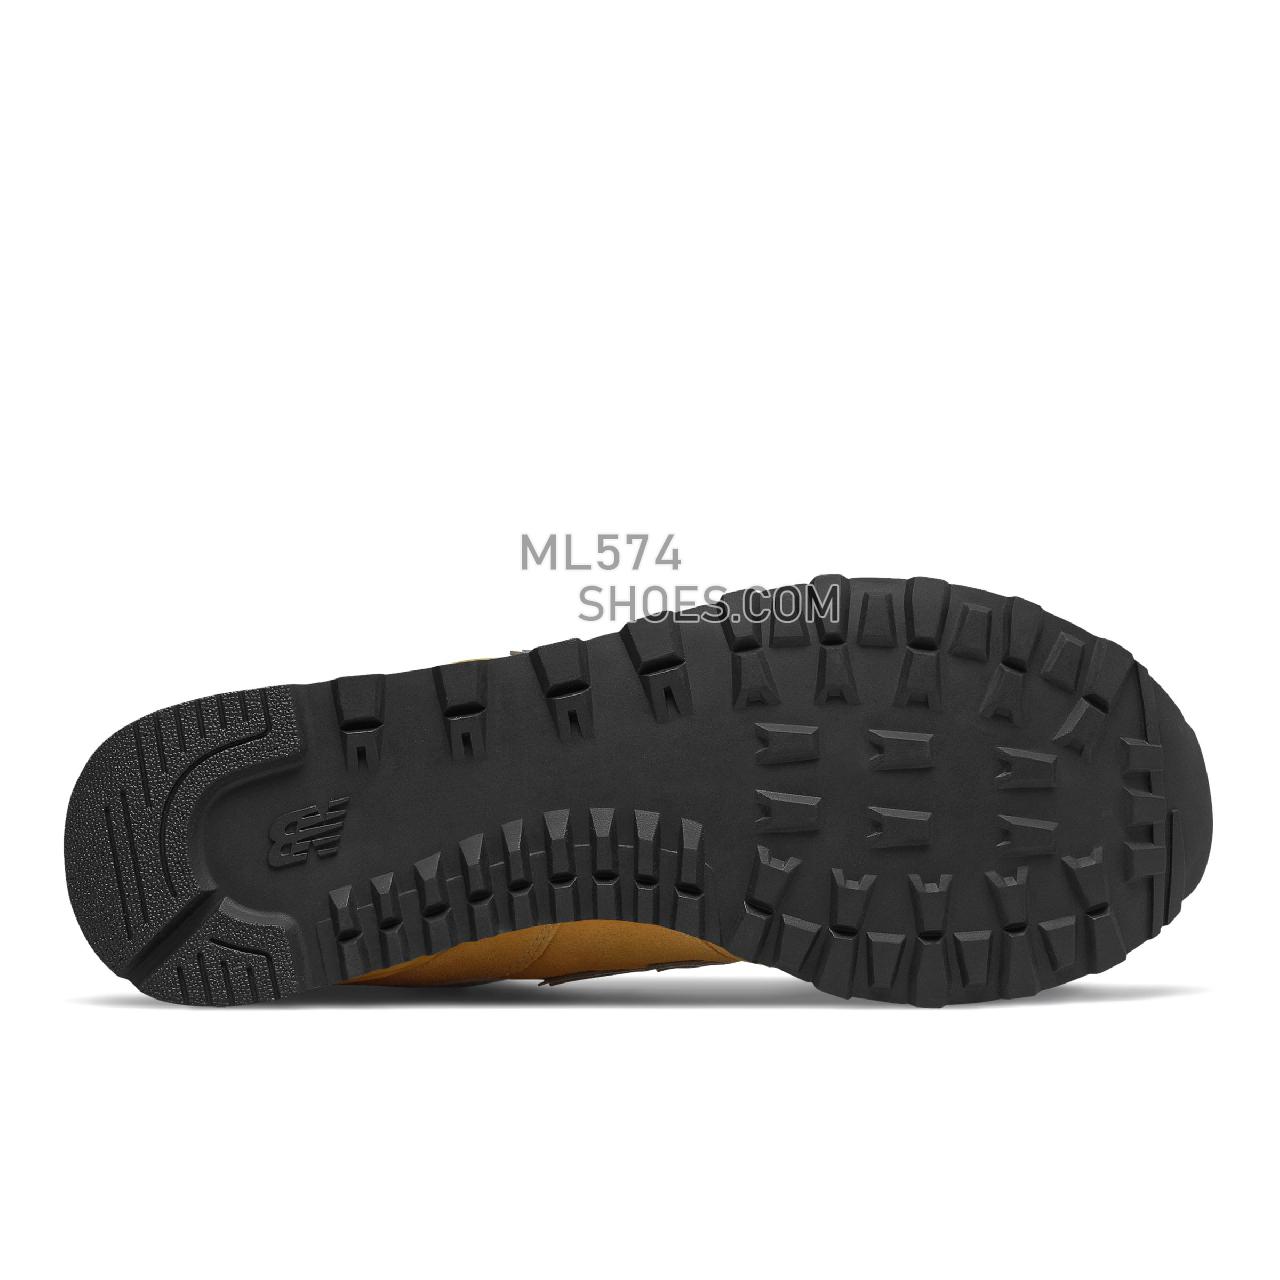 New Balance 574v2 - Men's Classic Sneakers - Aspen with White - ML574SSJ